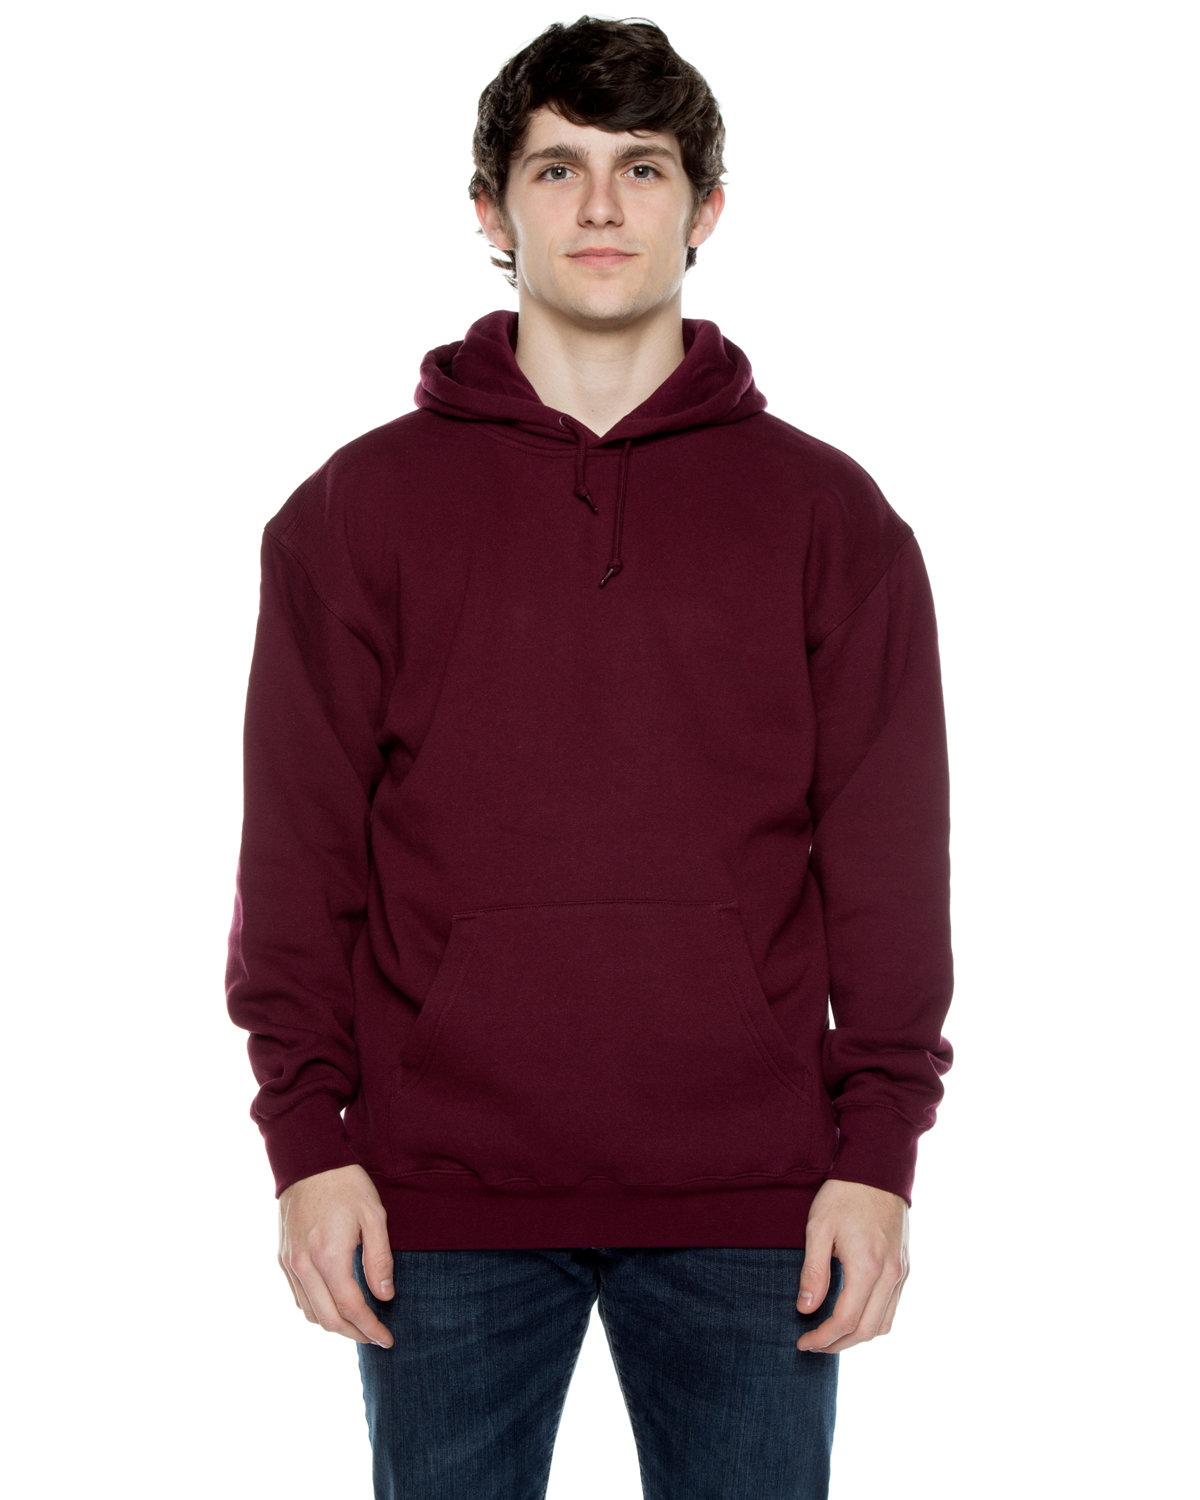 Beimar Drop Ship Unisex 10 oz. 80/20 Cotton/Poly Exclusive Hooded Sweatshirt MAROON 